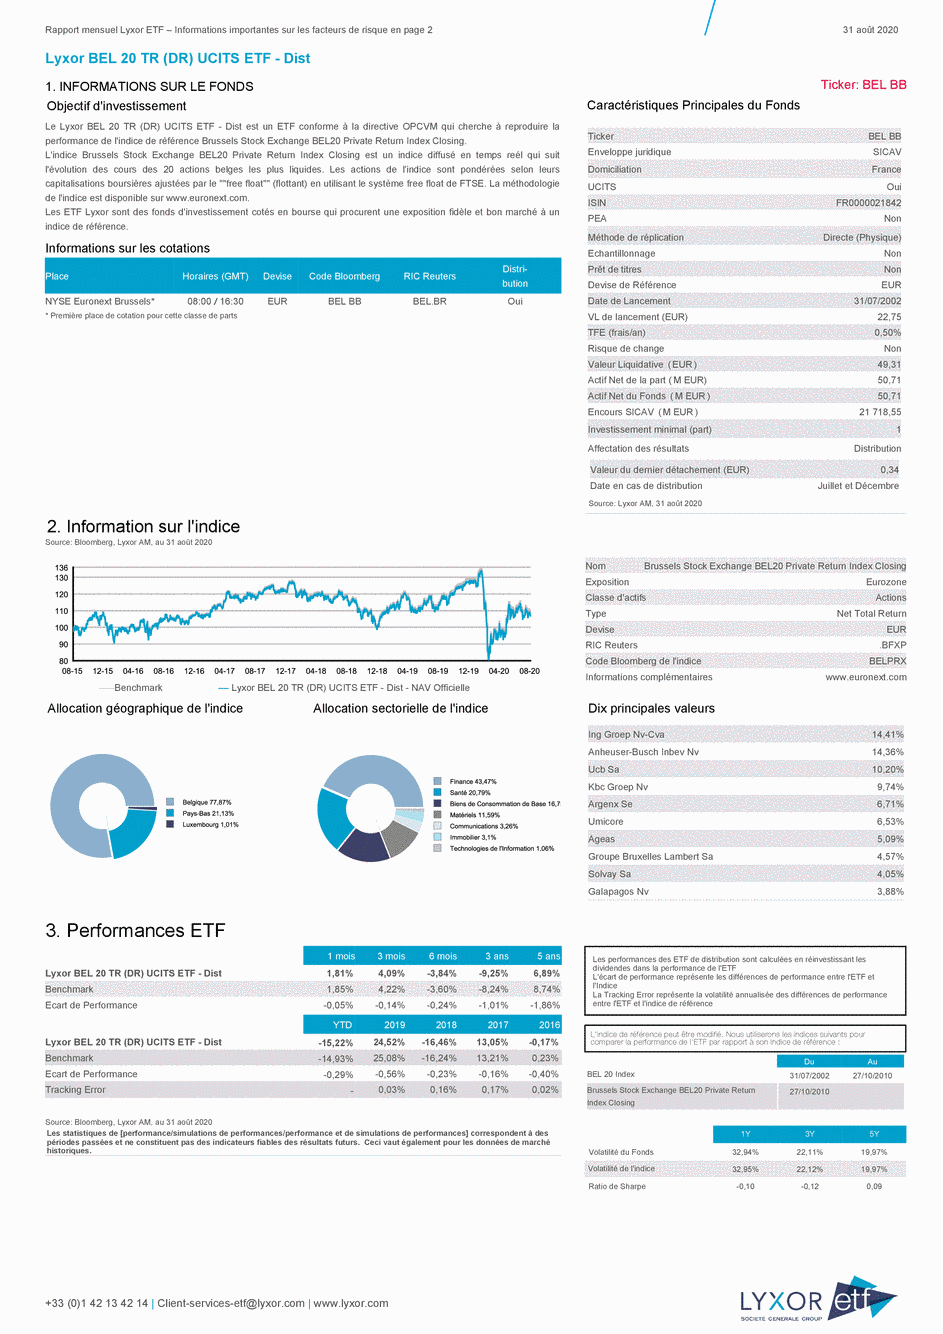 Reporting Lyxor BEL 20 TR (DR) UCITS ETF - Dist - 31/08/2020 - Français